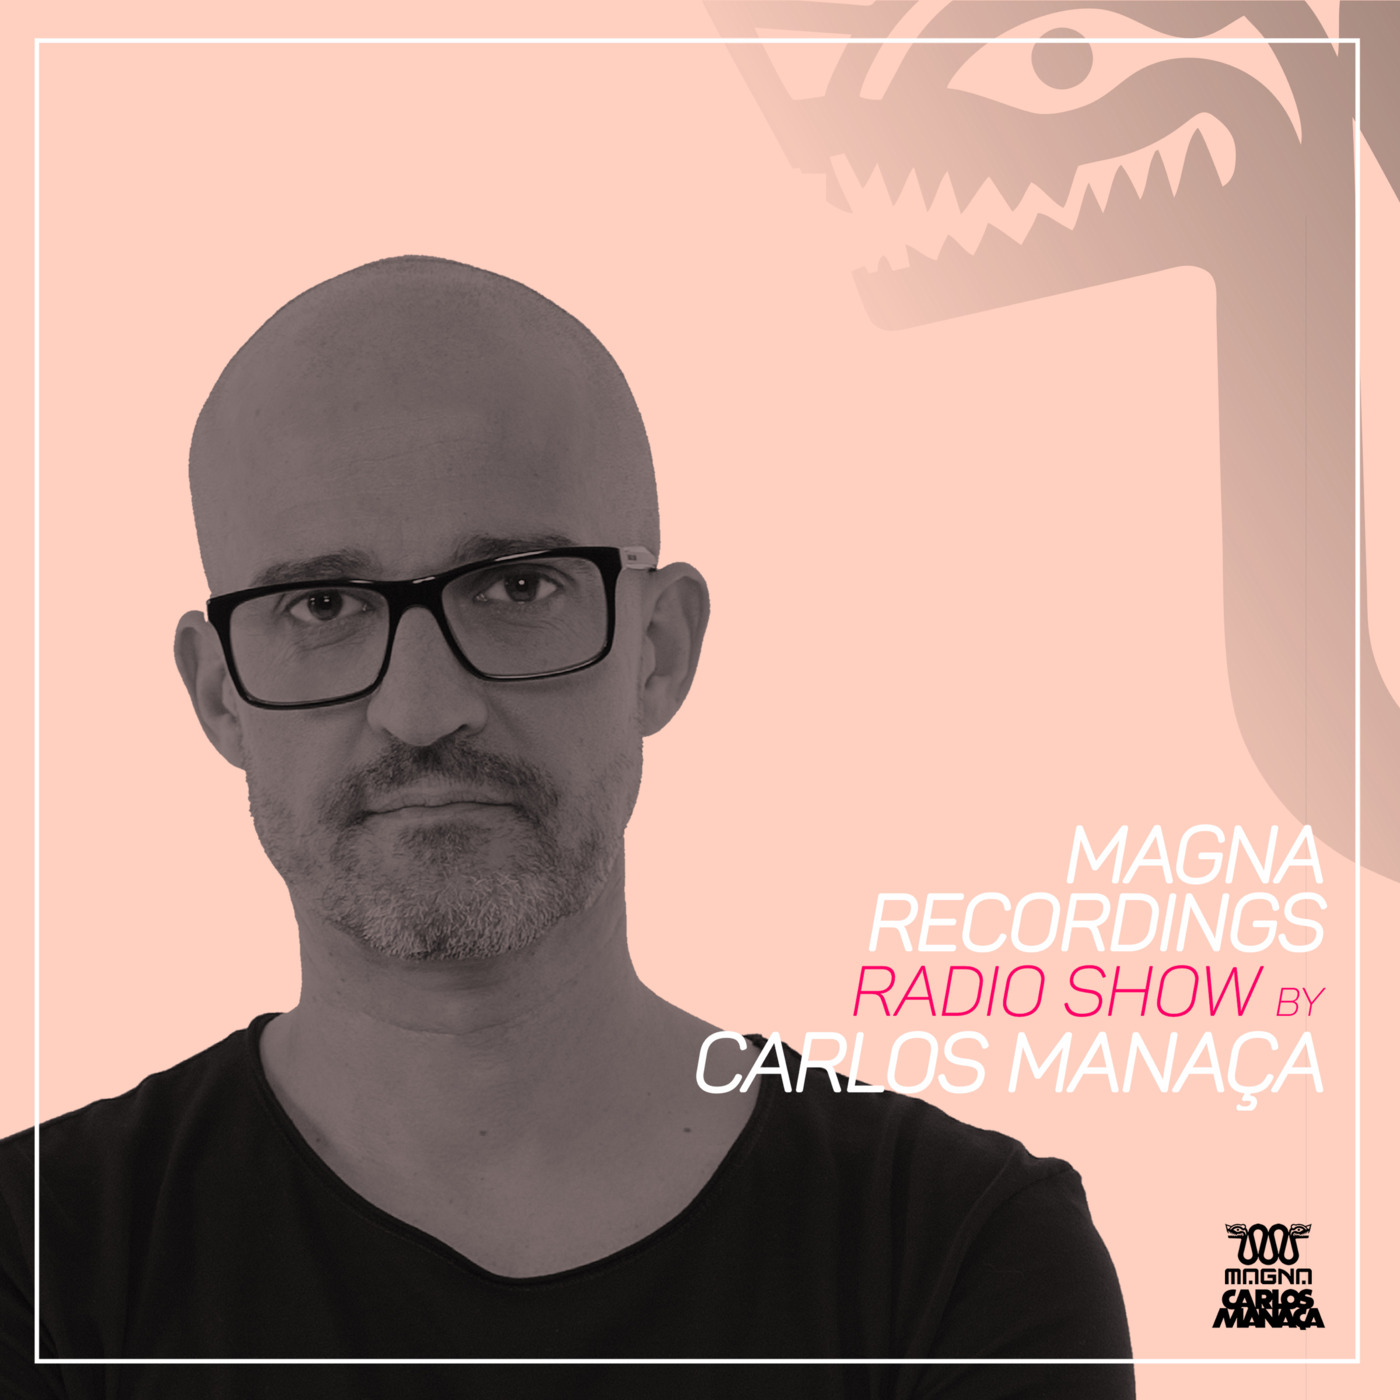 Episode 128: Magna Recordings Radio Show by Carlos Manaça 303 | Kremlin [Lisboa]